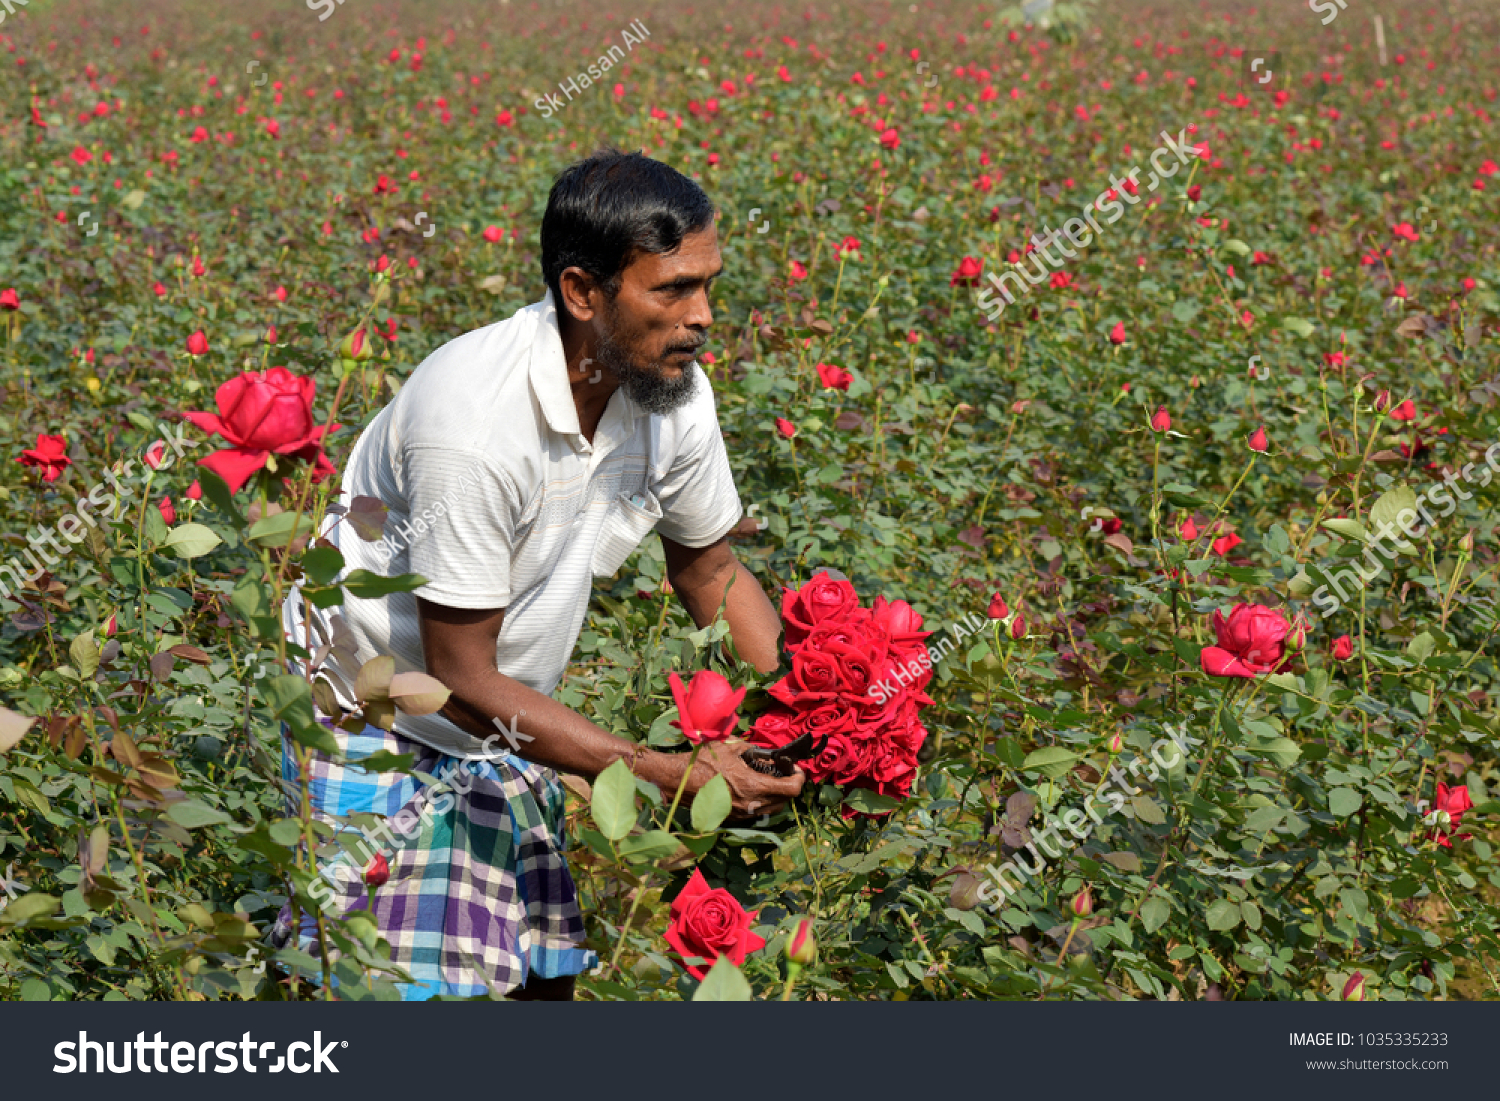 DHAKA, BANGLADESH - FEBRUARY 07, 2017: Bangladeshi farmer collects rose from their field during flower harvest at Birulia, Savar, Bangladesh on February 07, 2017. #1035335233